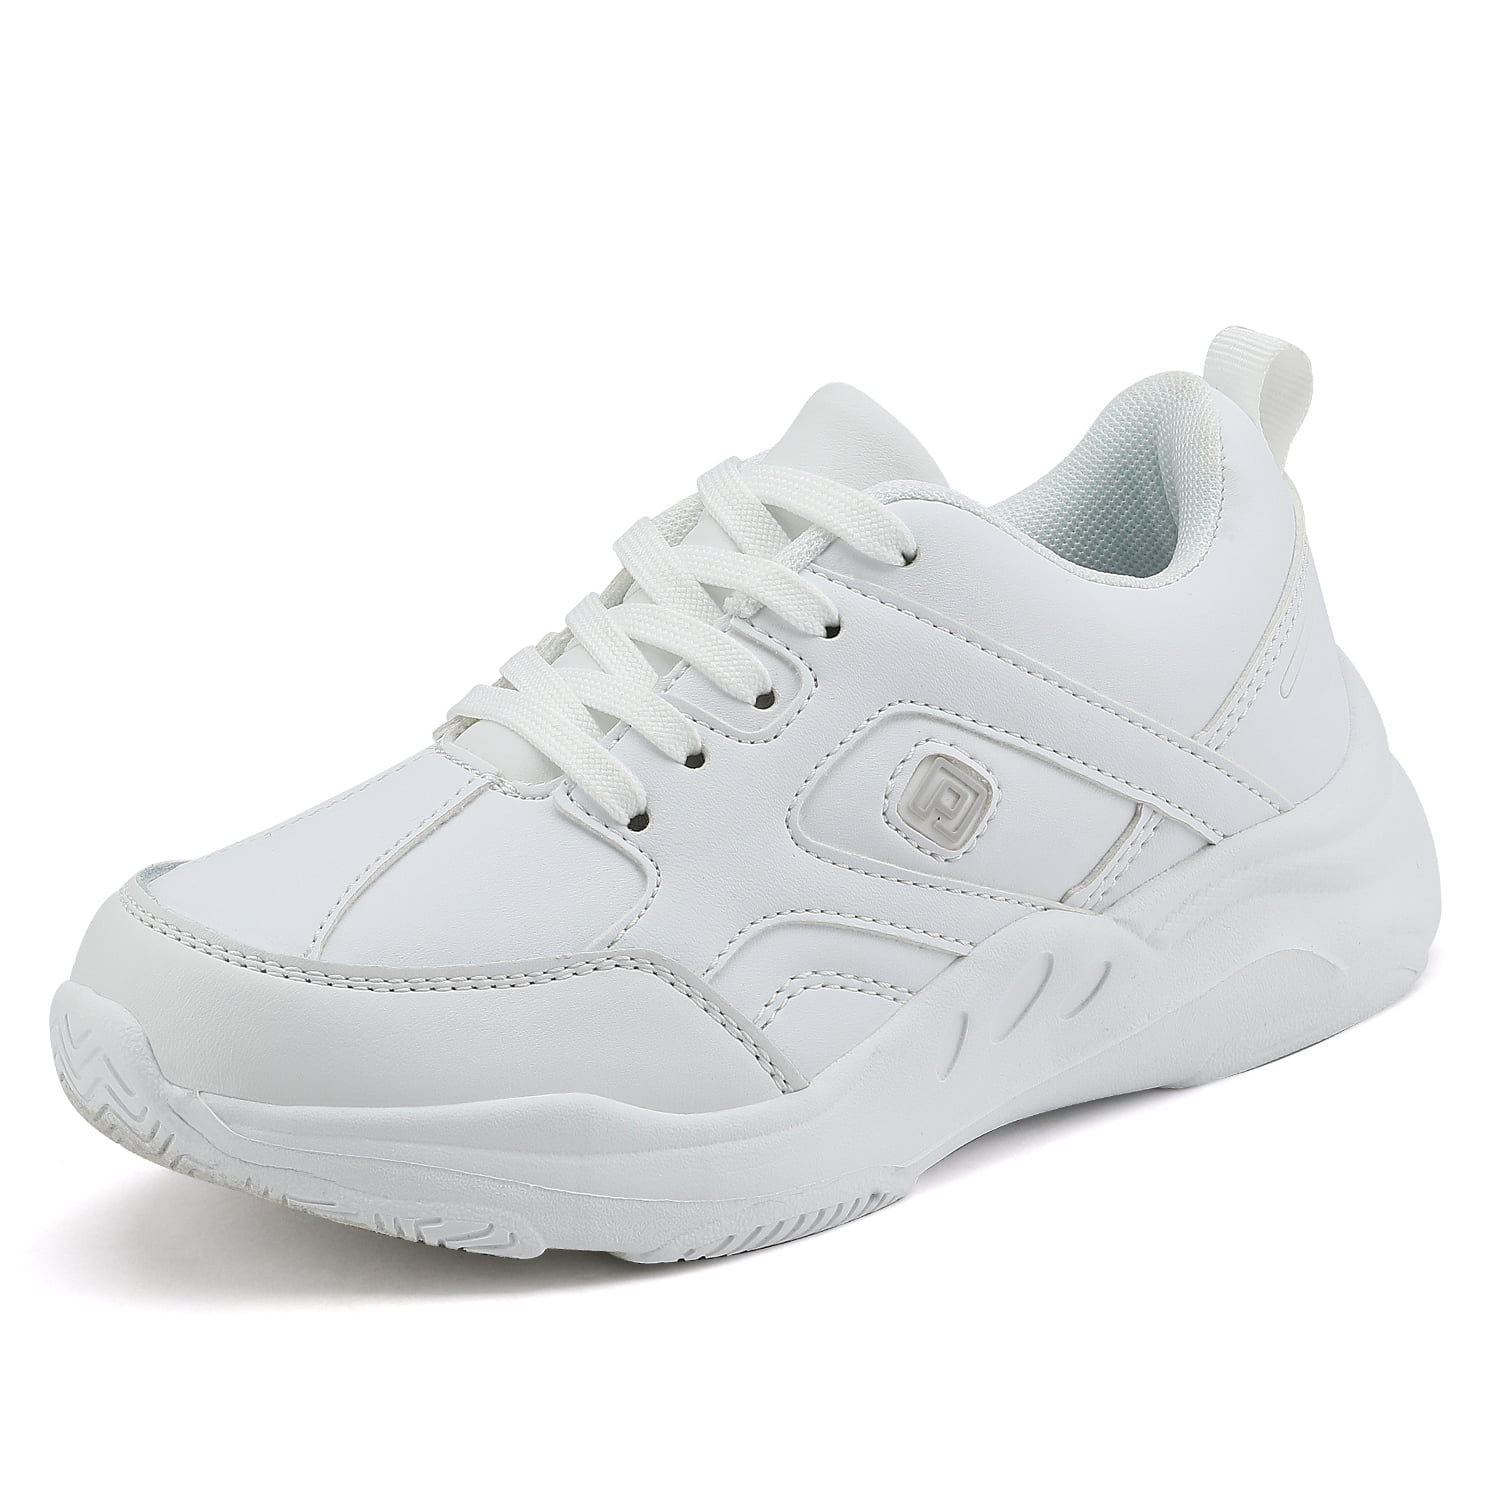 walmart girls white tennis shoes